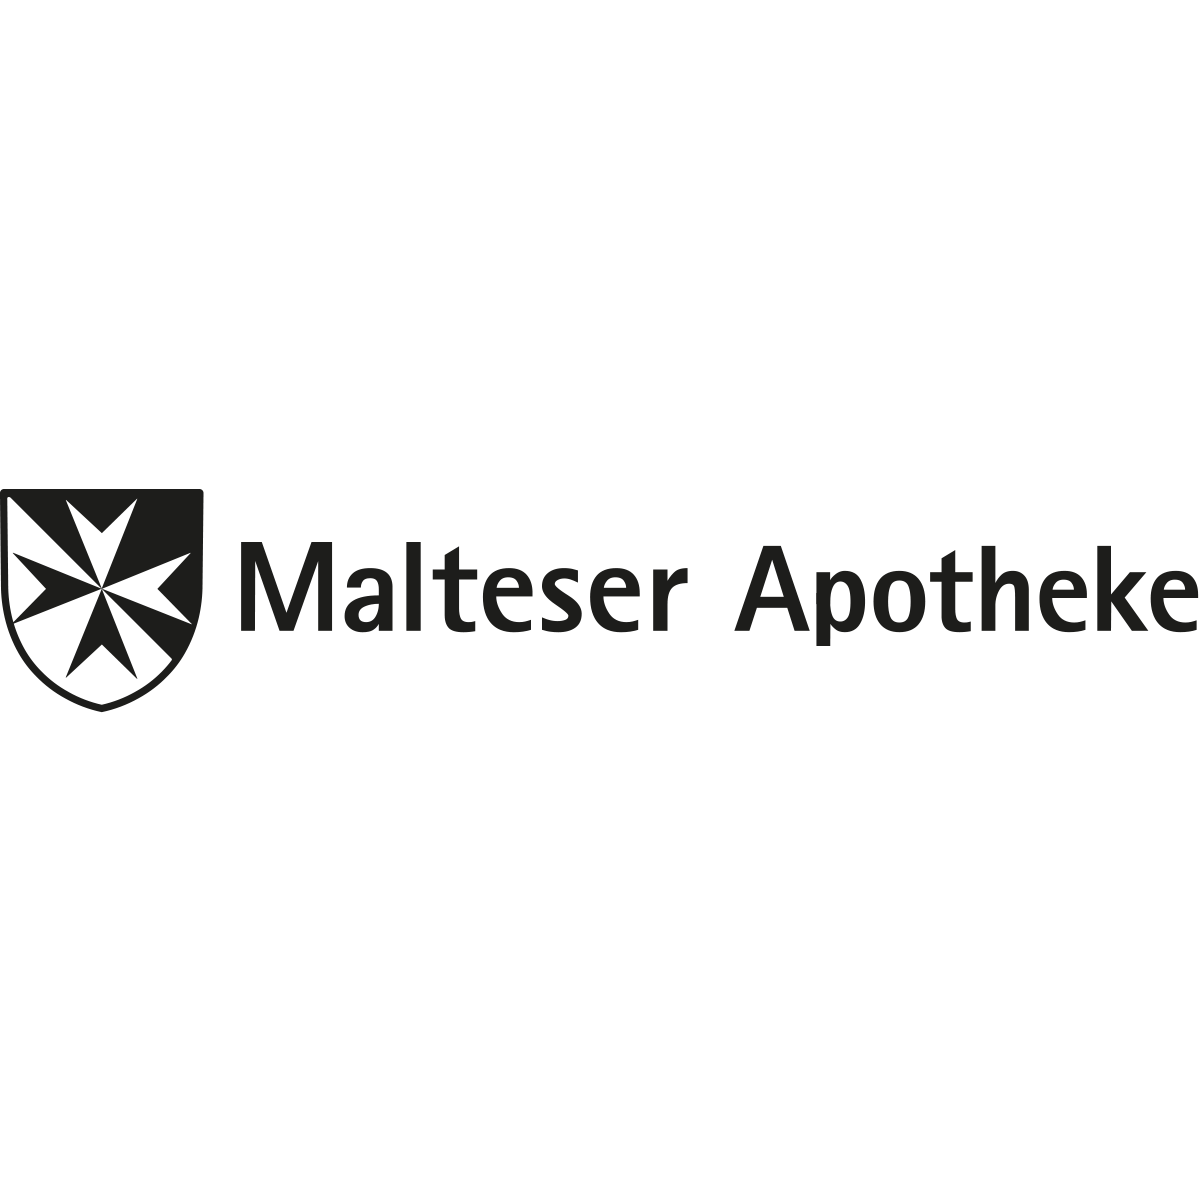 Malteser Apotheke in Bergisch Gladbach - Logo